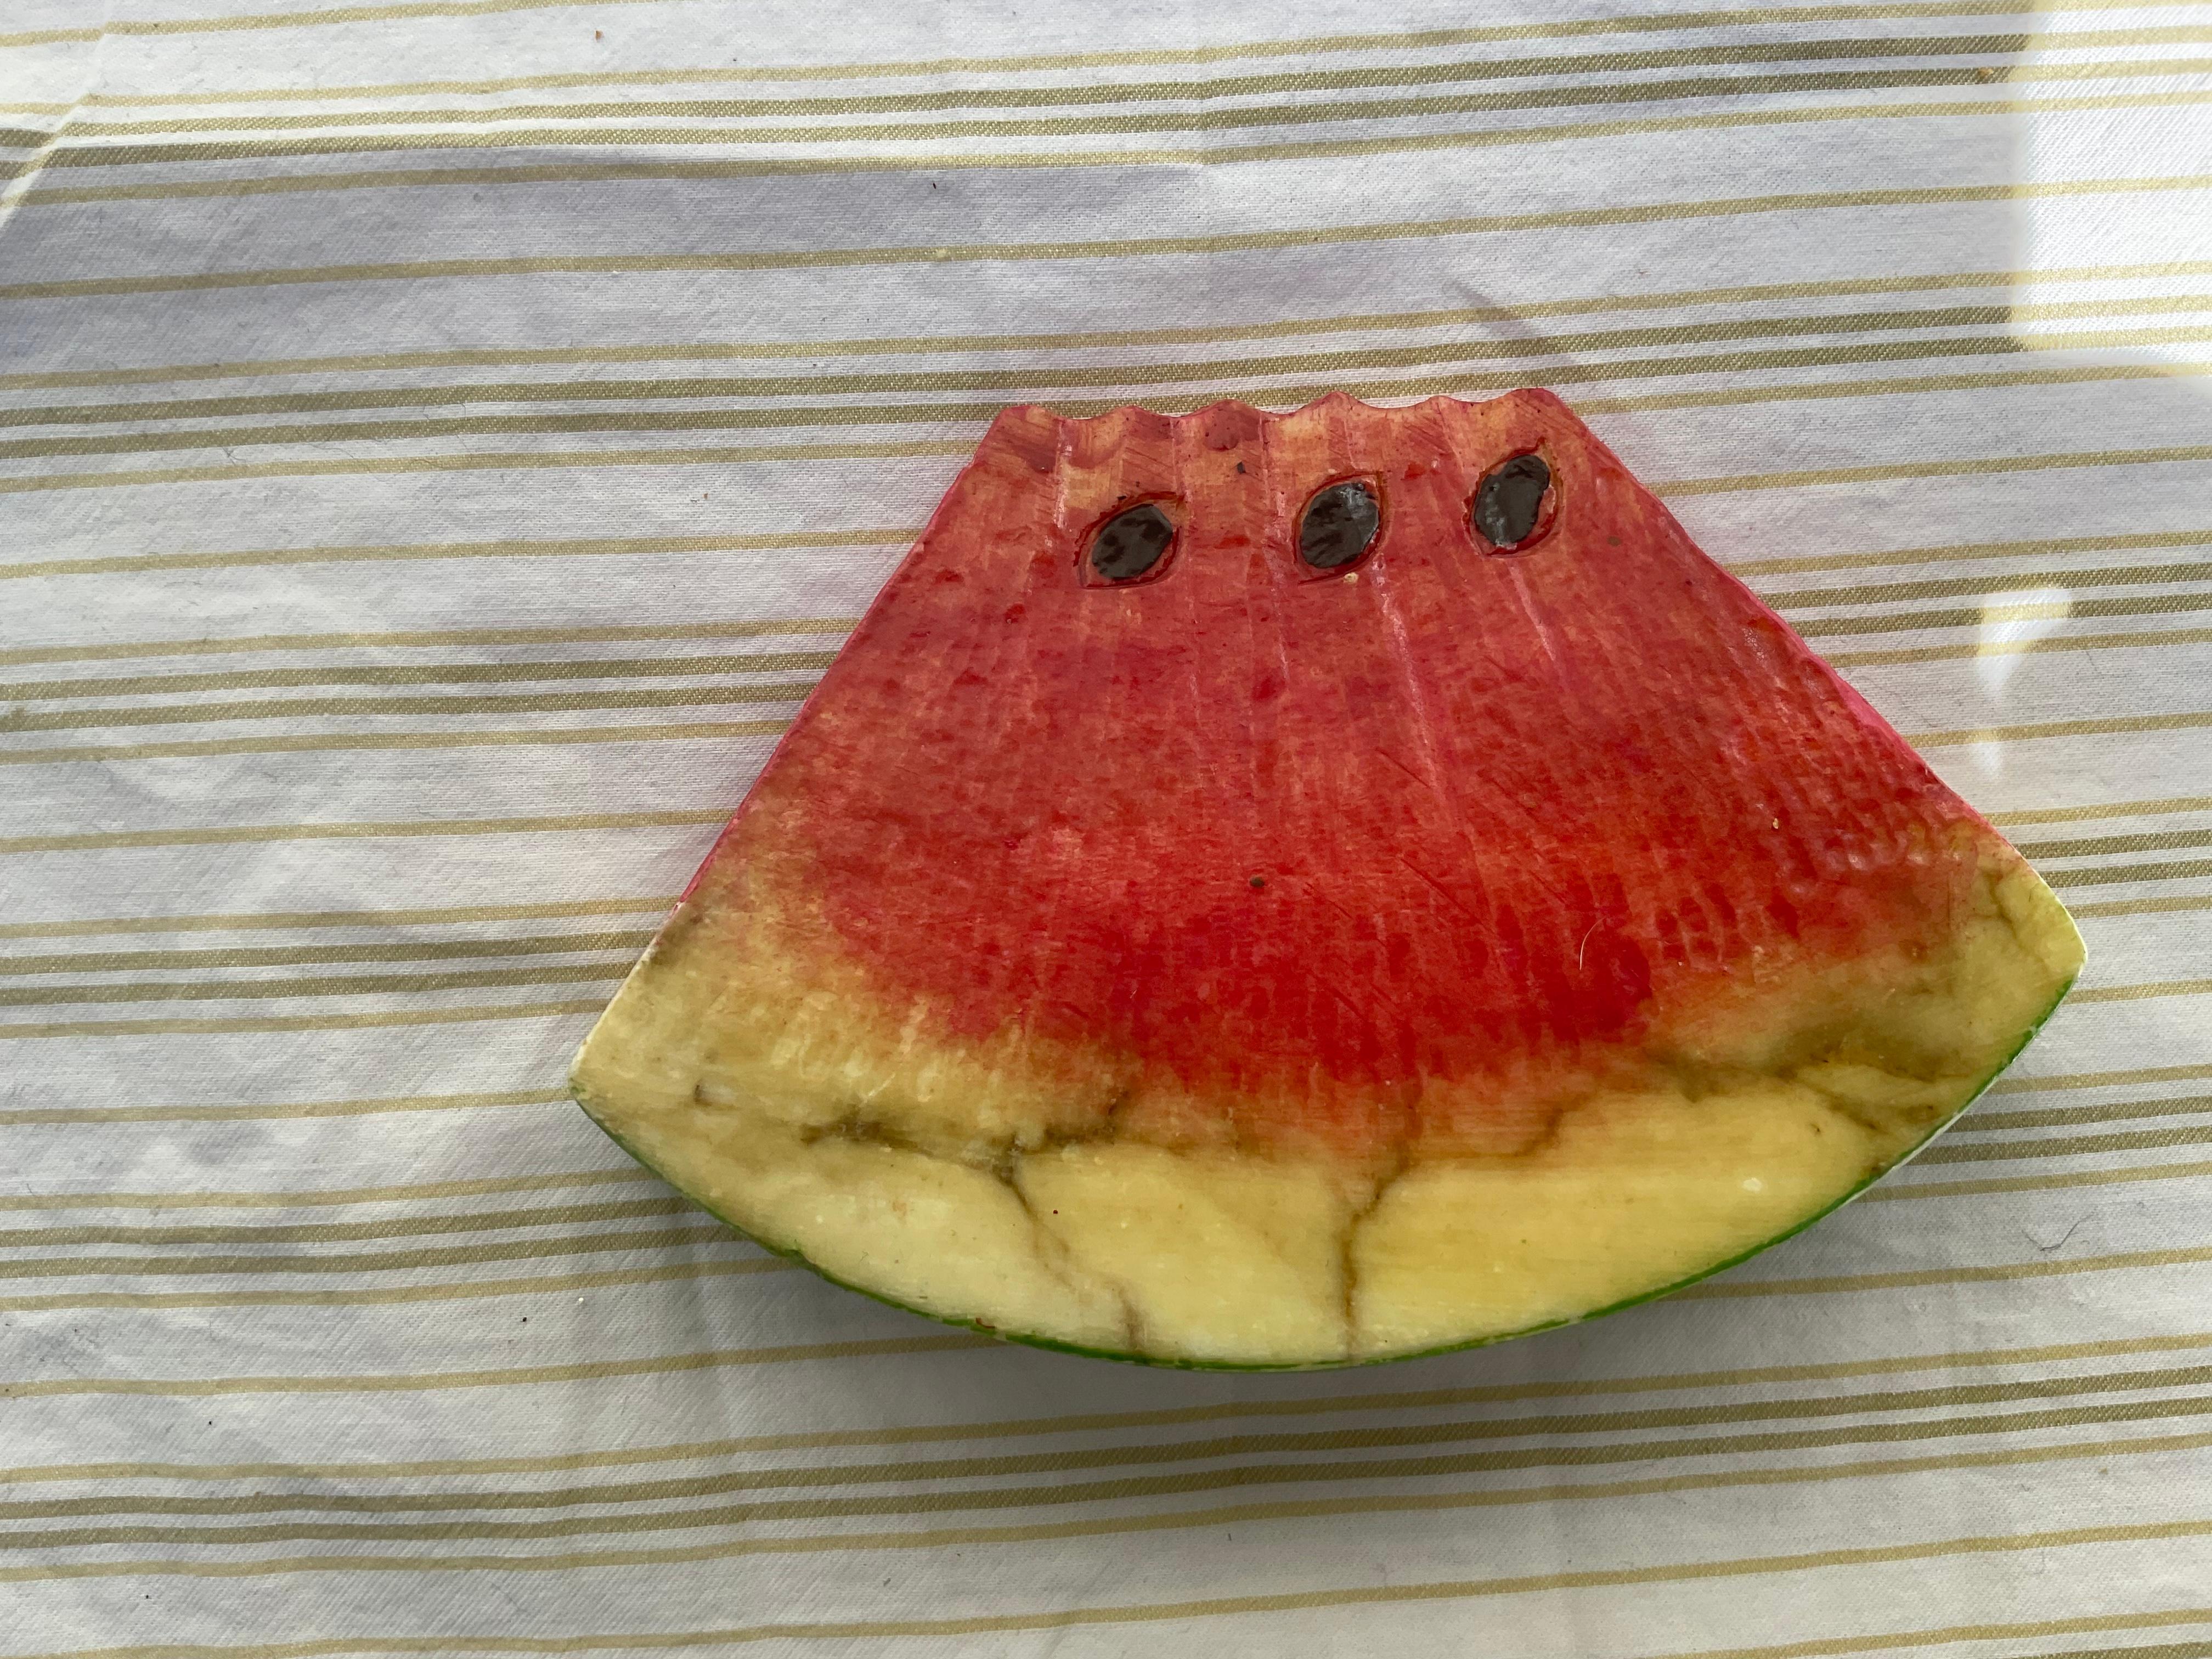 1960s Italian Stone Fruit, Watermelon Slices, 3 1